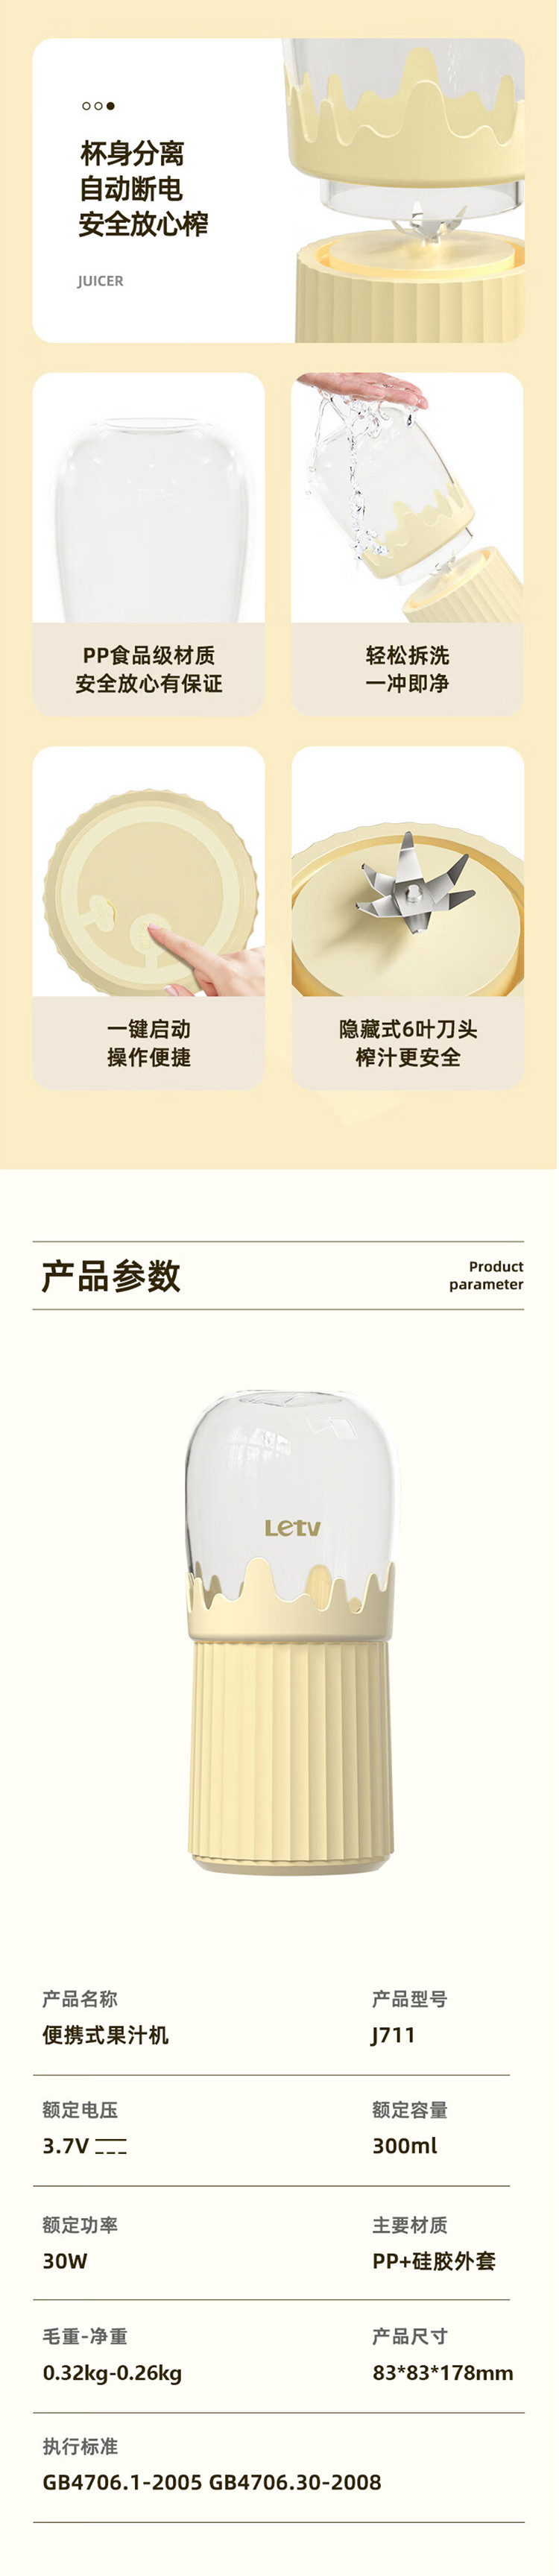 乐视Letv 便携式果汁杯J711